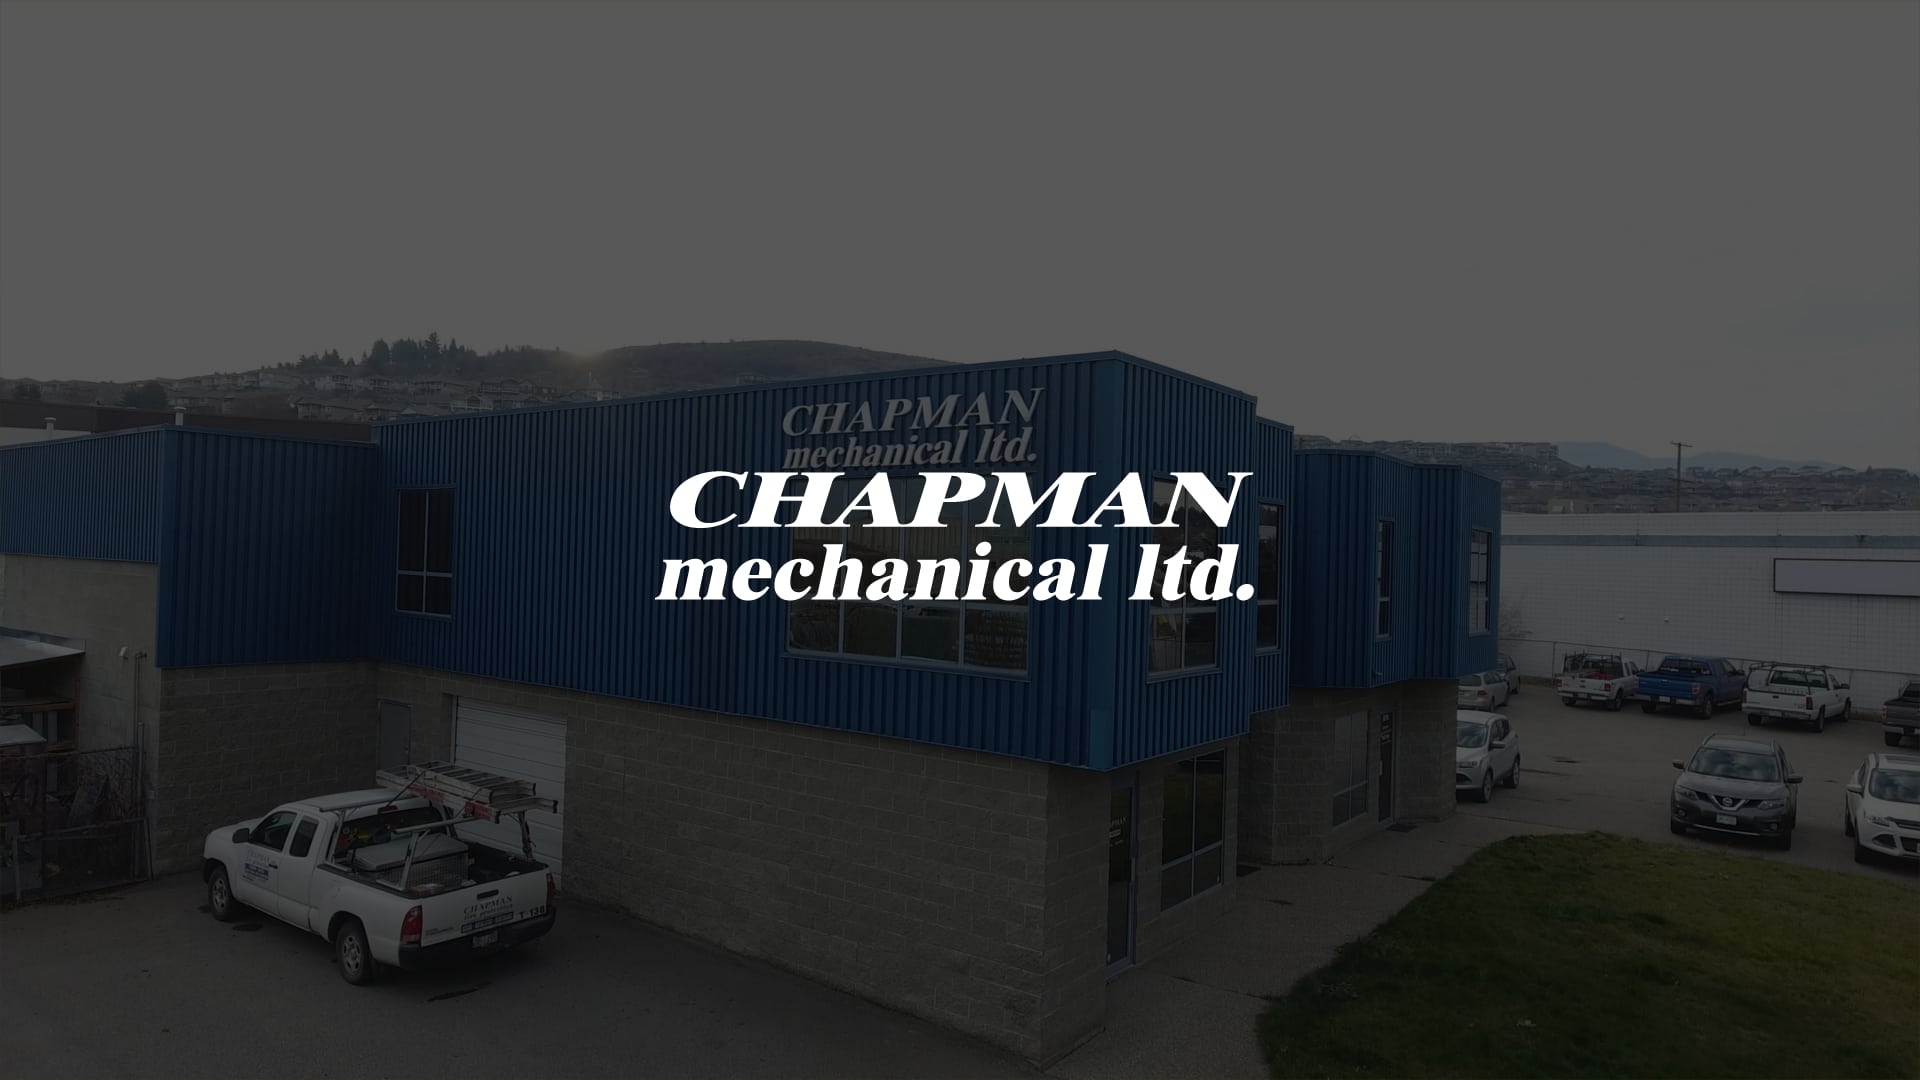 Buy Online - Chapman Mechanical Ltd.